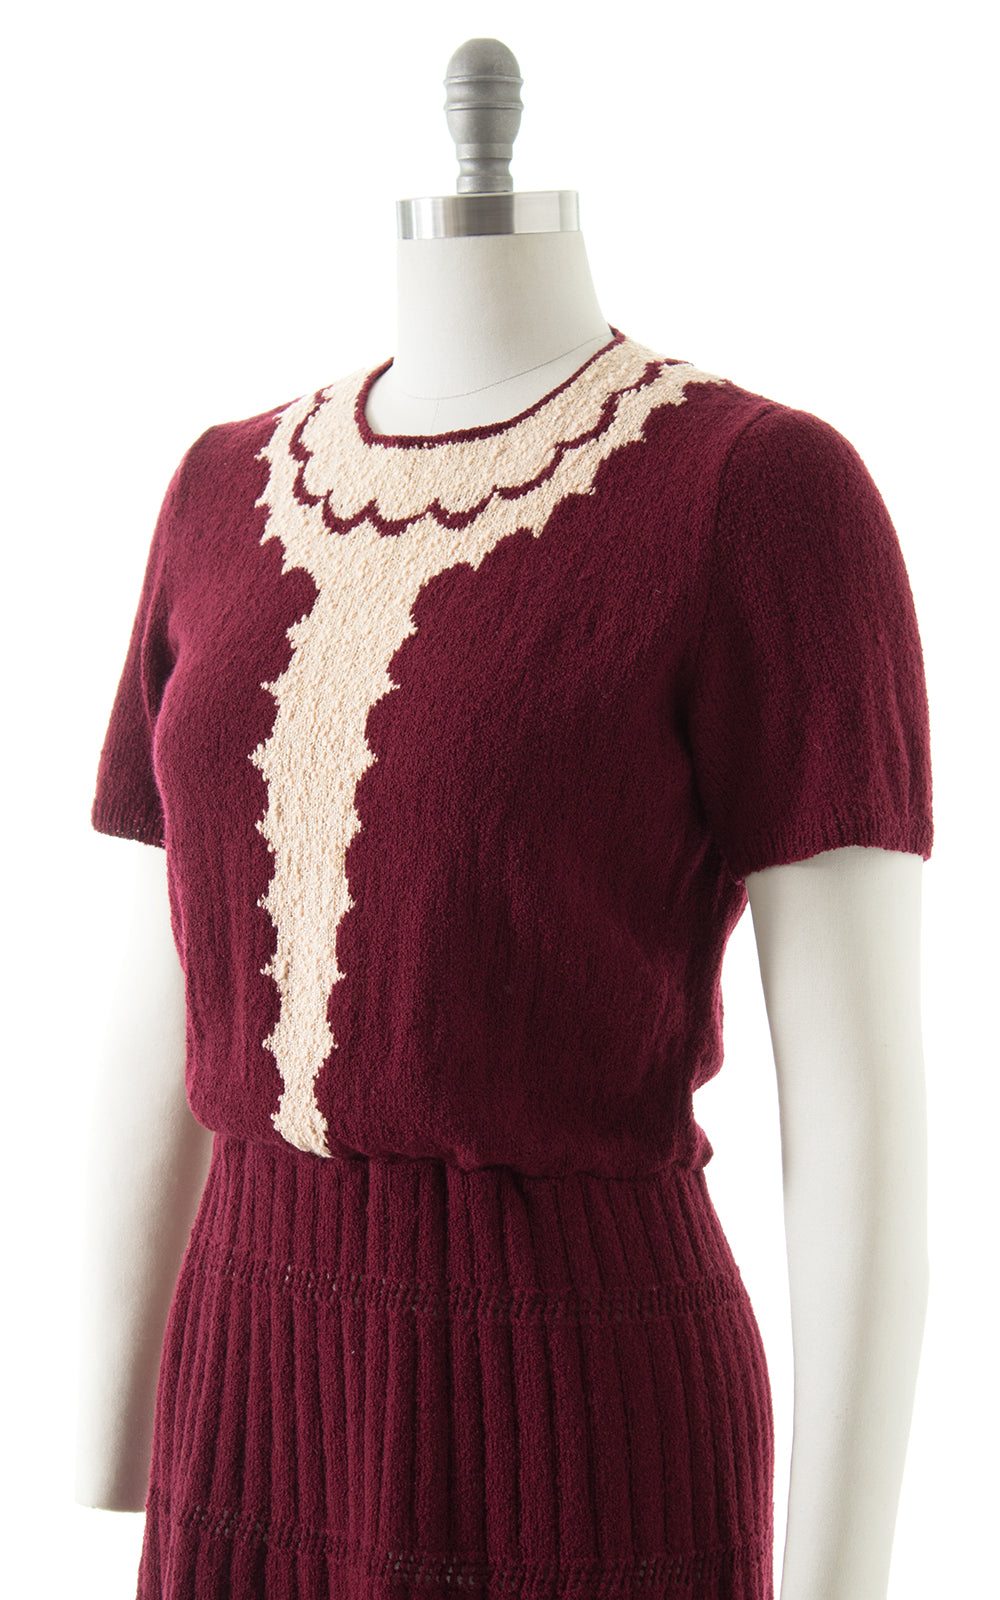 1950s Metallic Scalloped Knit Wool Sweater Dress BirthdayLifeVintage